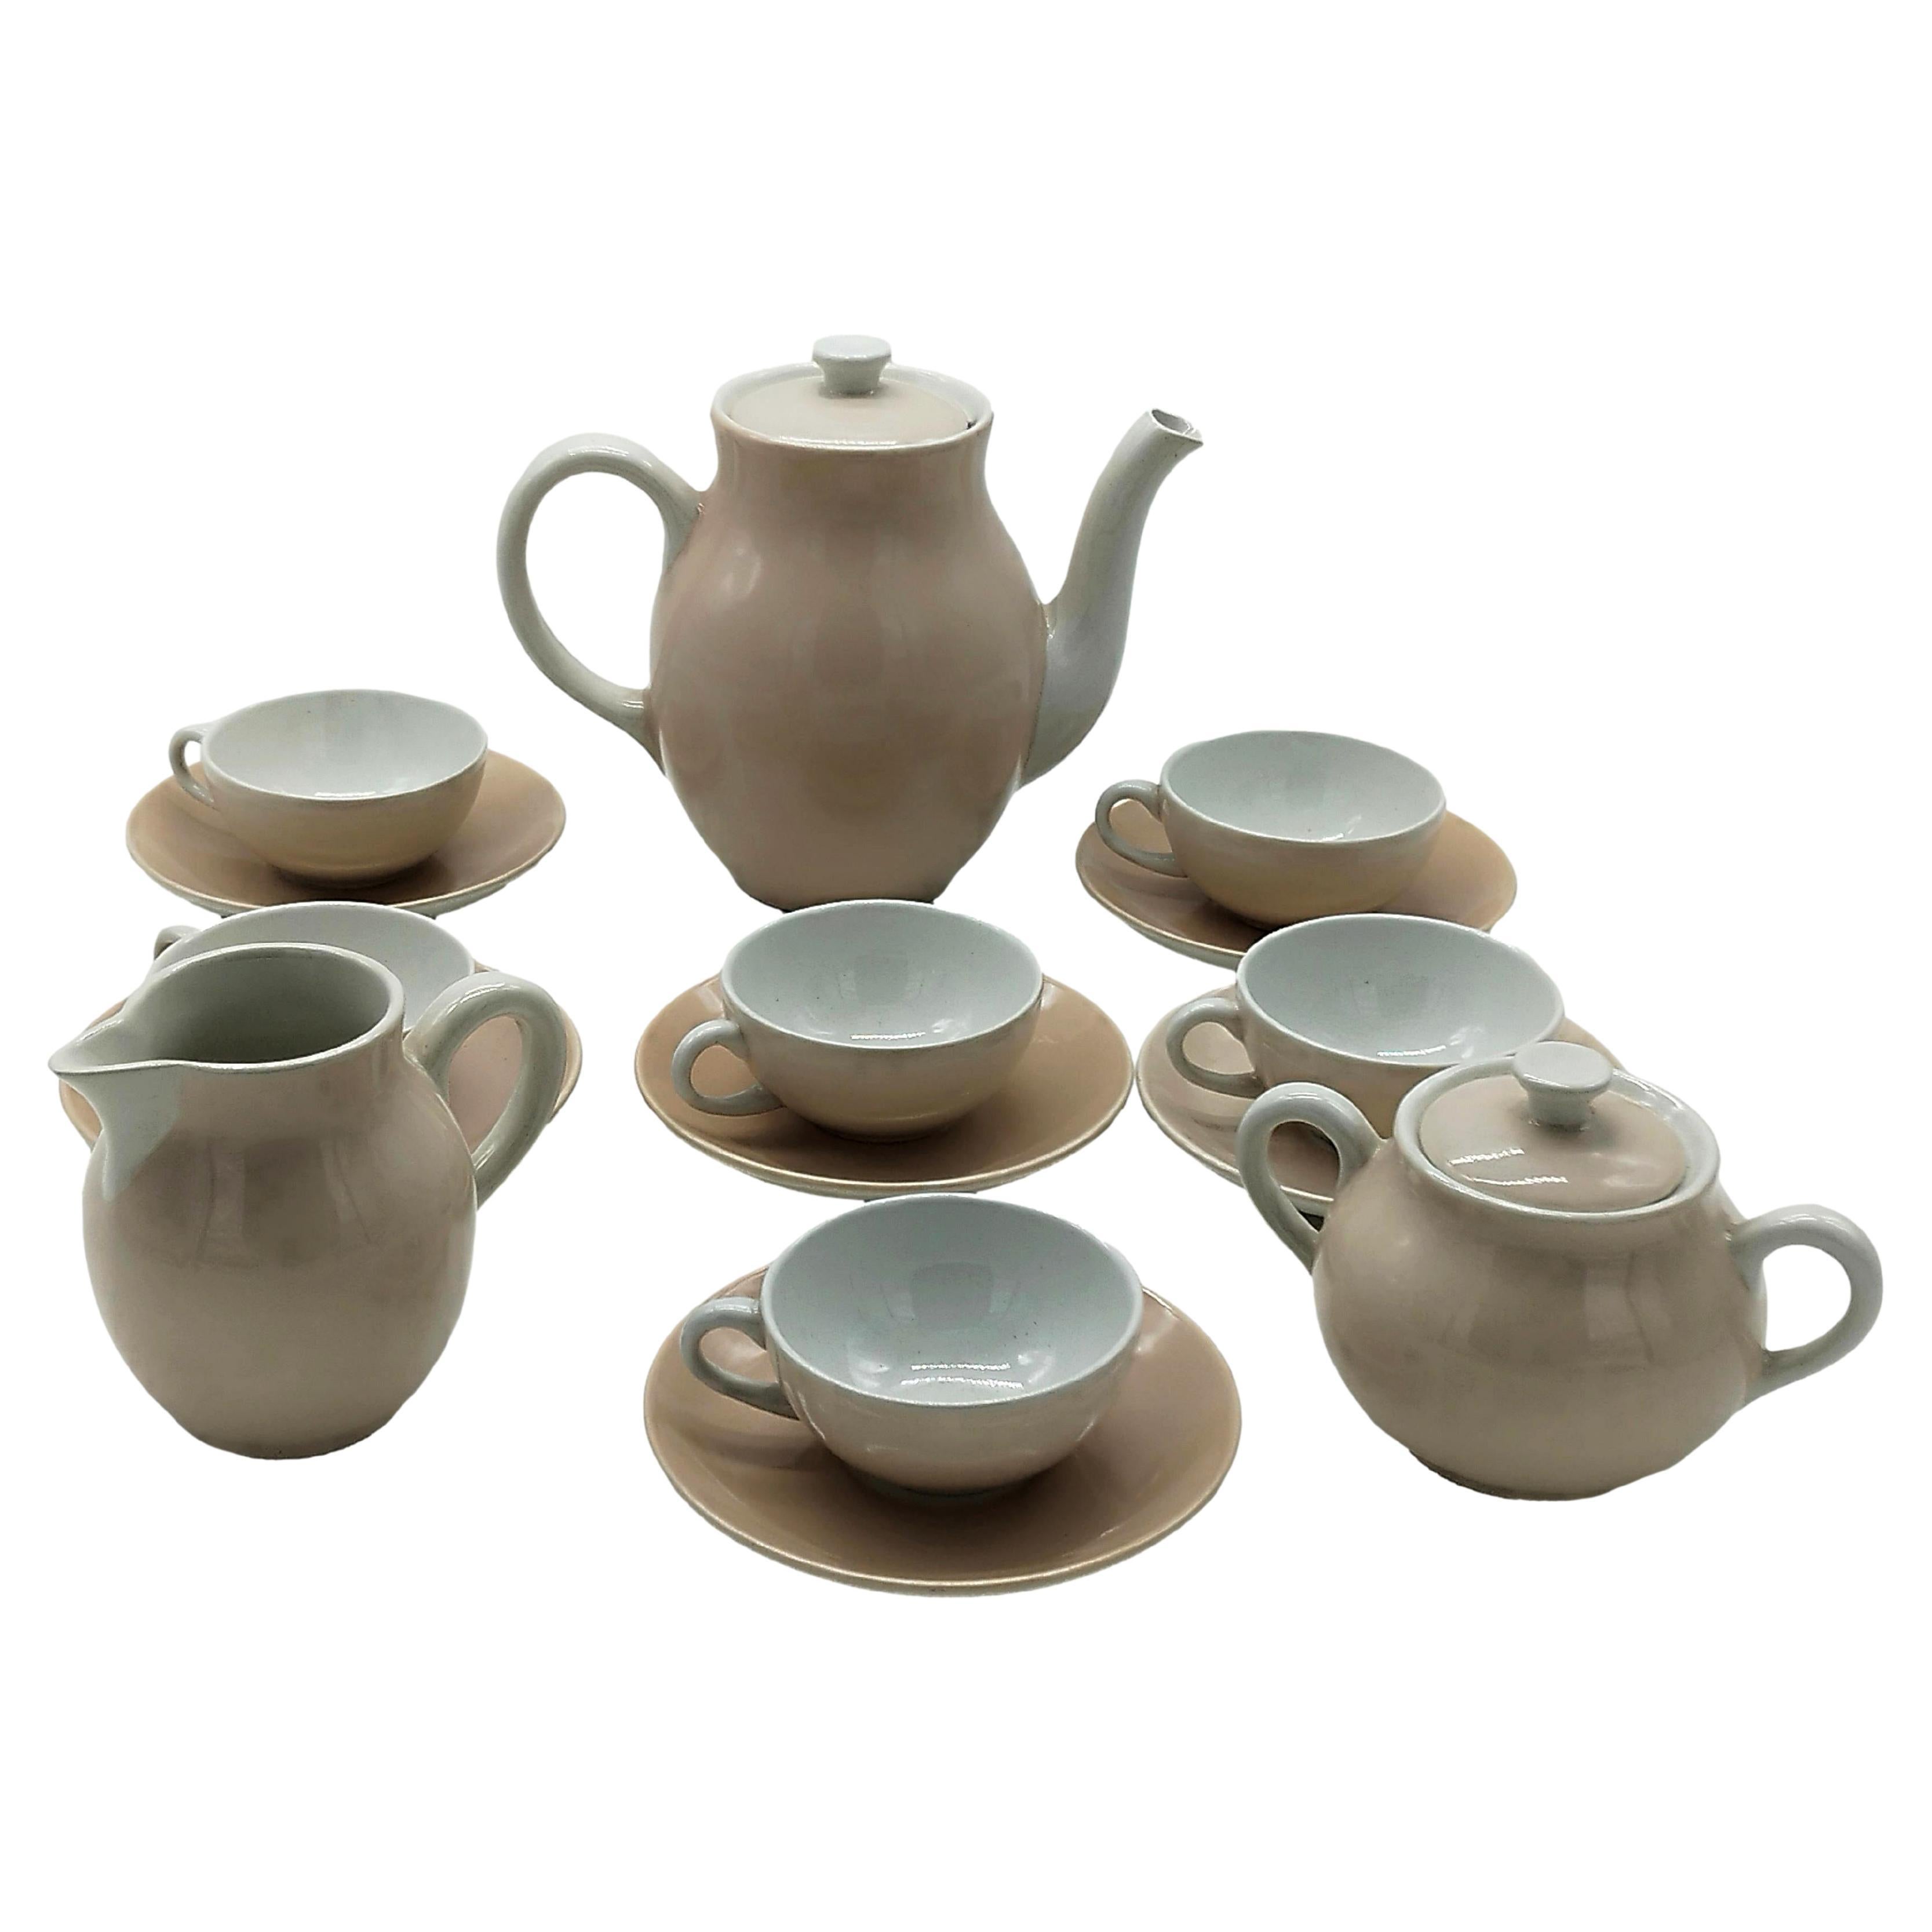 S.C. Richard S. Cristoforo Porcelain Tea Service, Italy 1930s For Sale